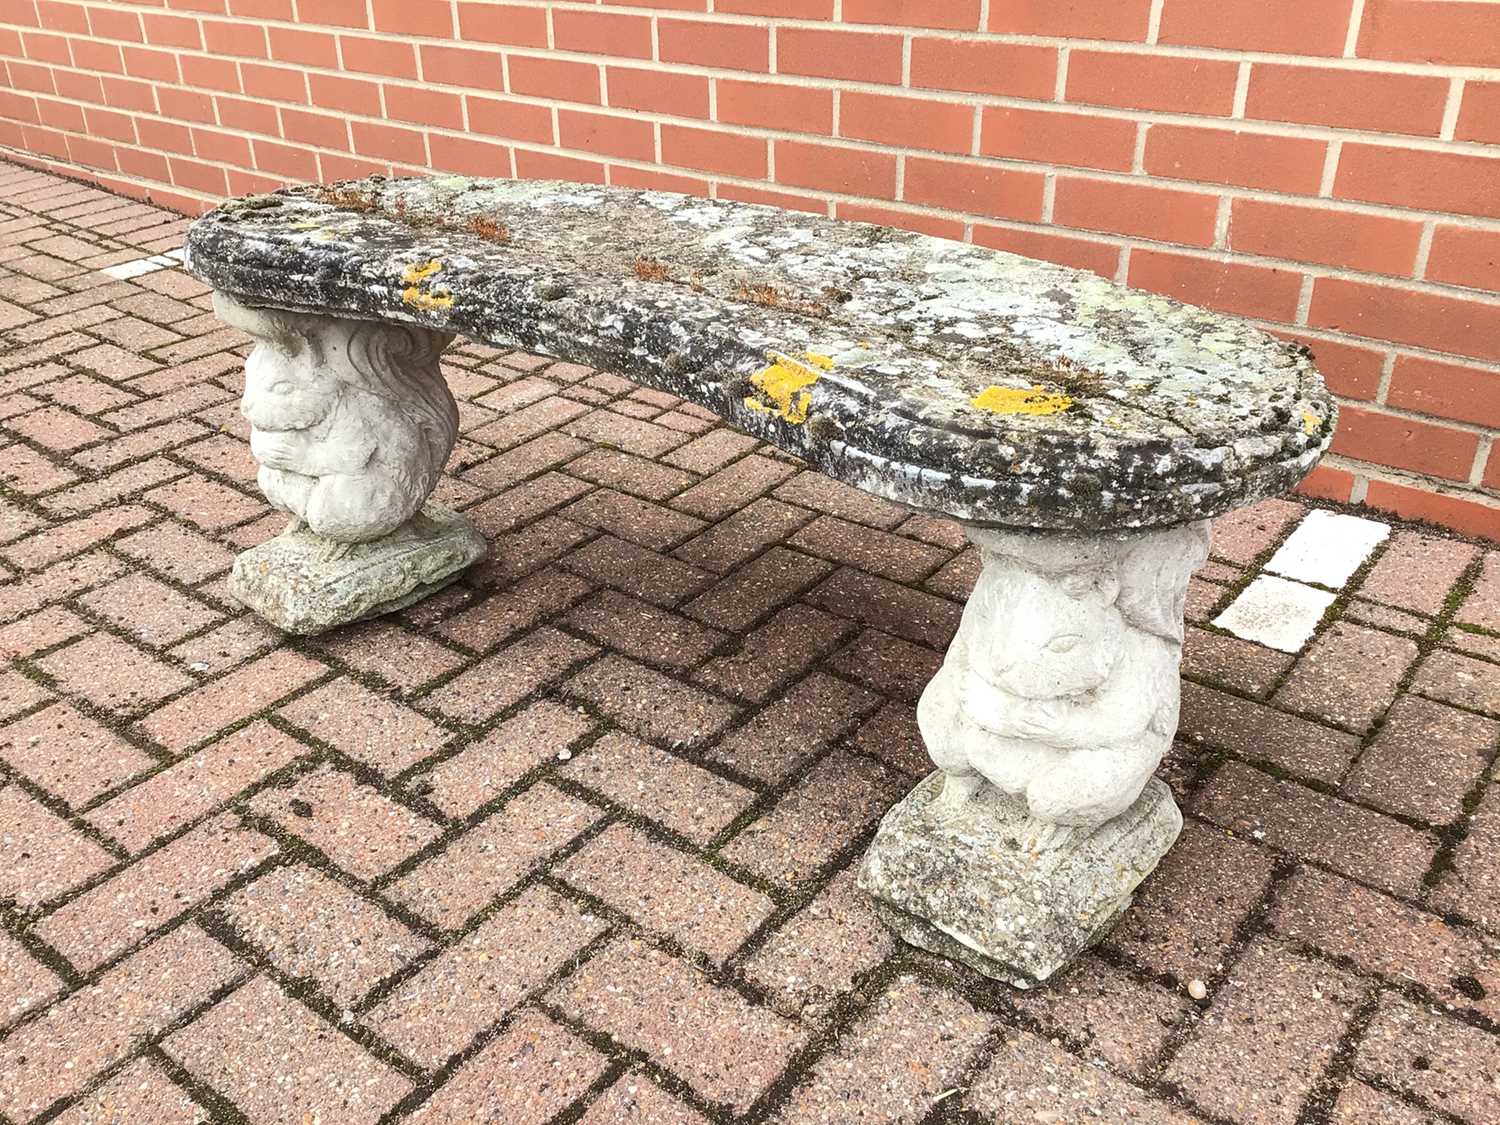 Concrete garden bench with squirrel supports 111cm x 46cm